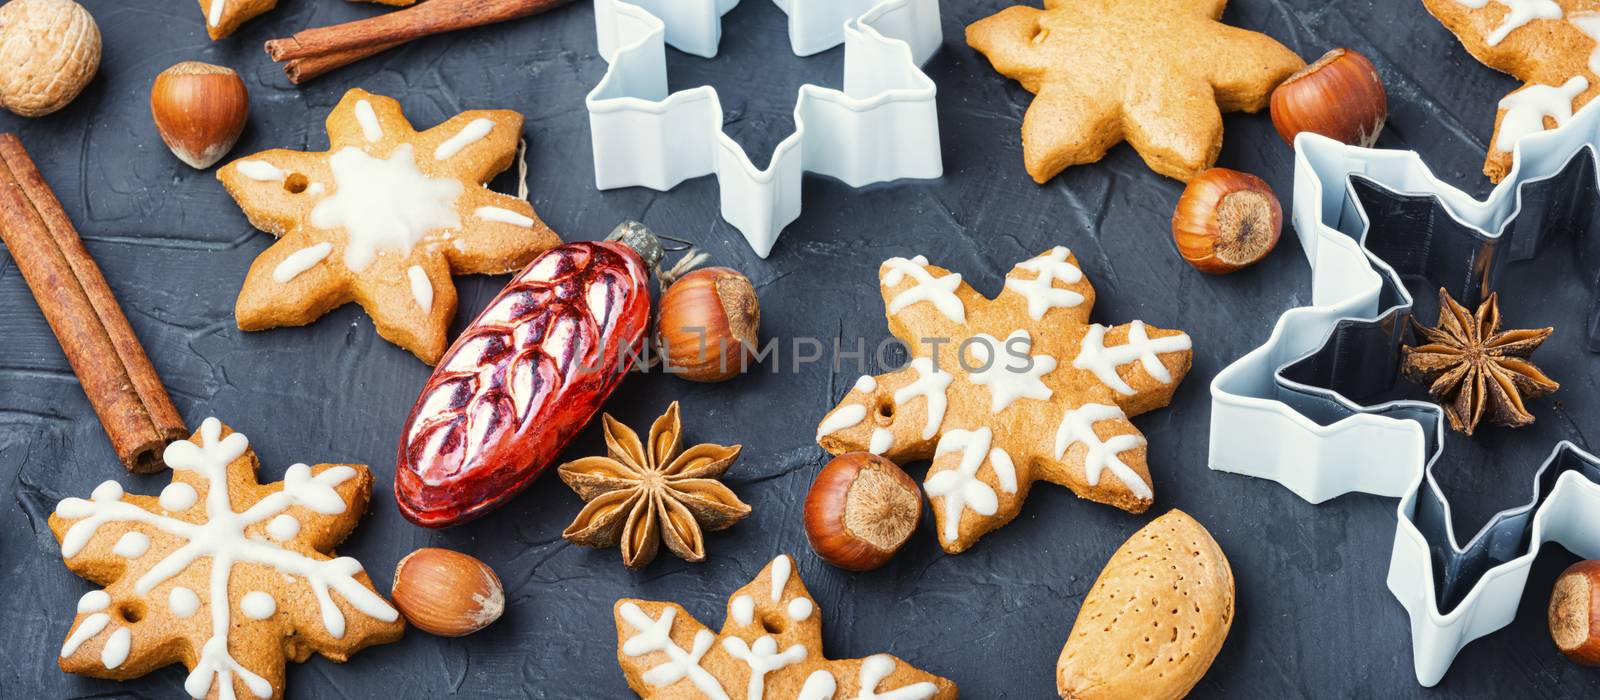 Baked Christmas cookies by LMykola